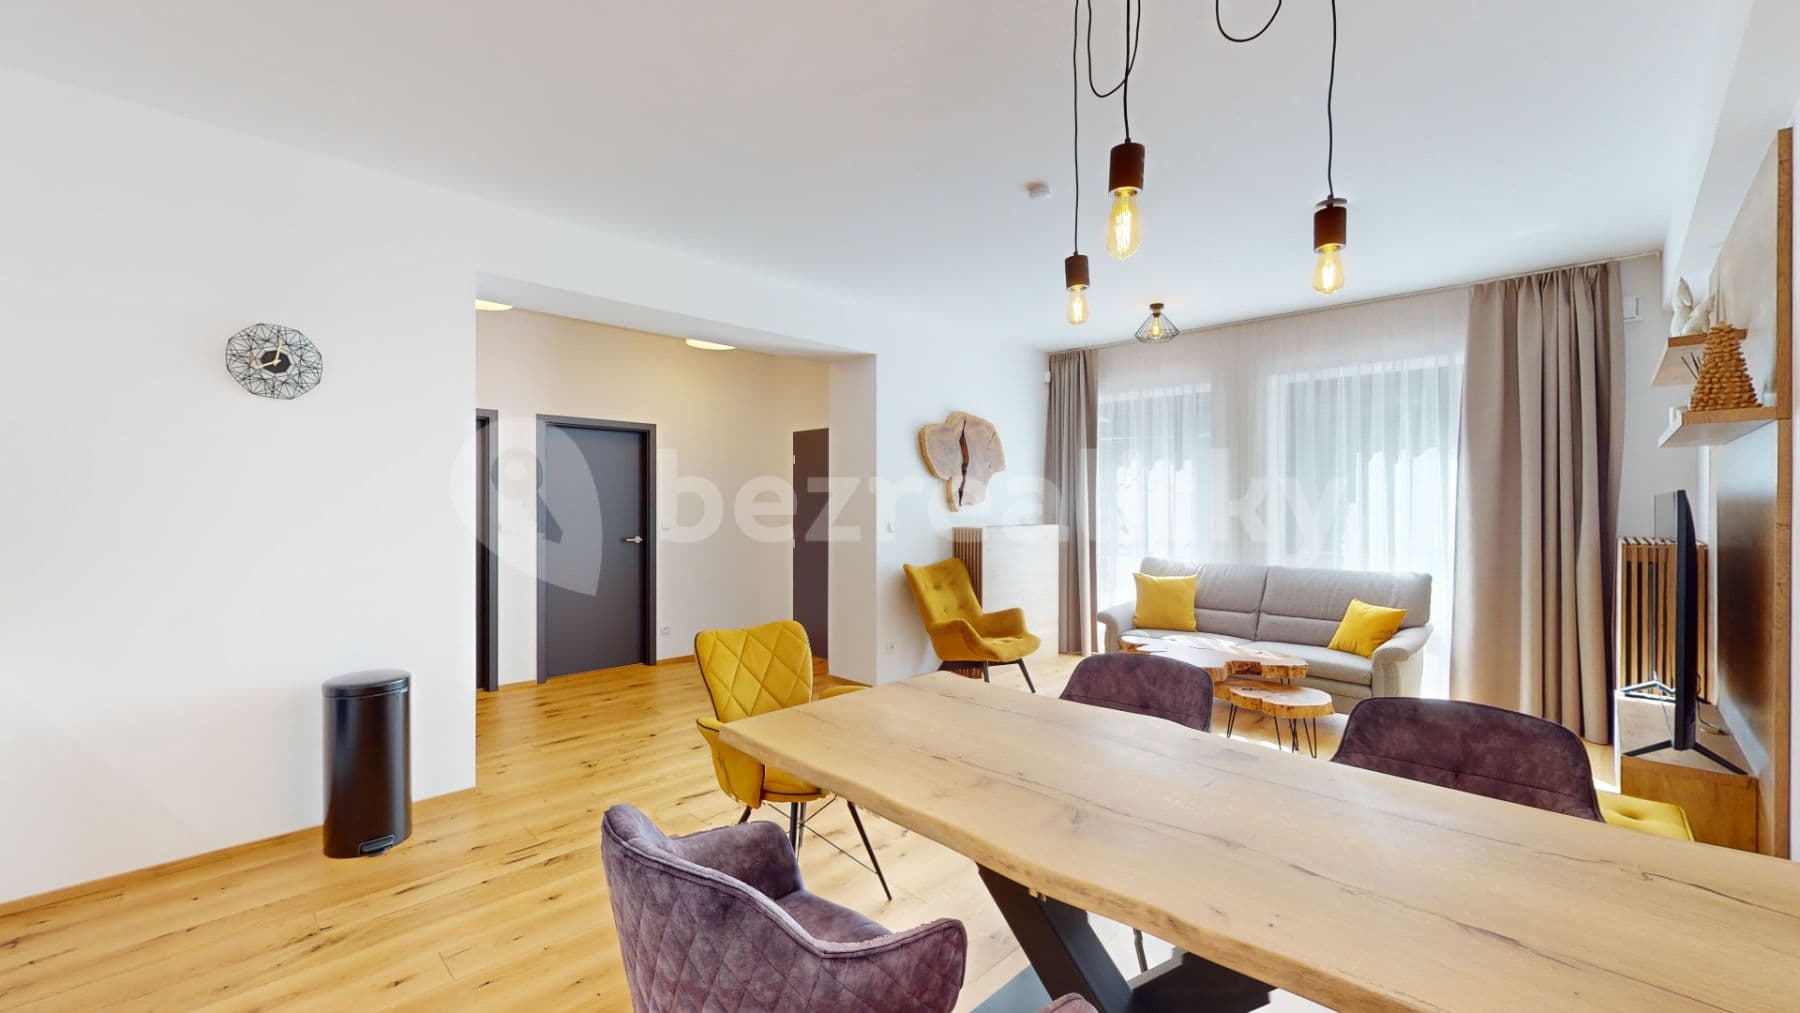 1 bedroom with open-plan kitchen flat for sale, 63 m², Vítkovice, Liberecký Region